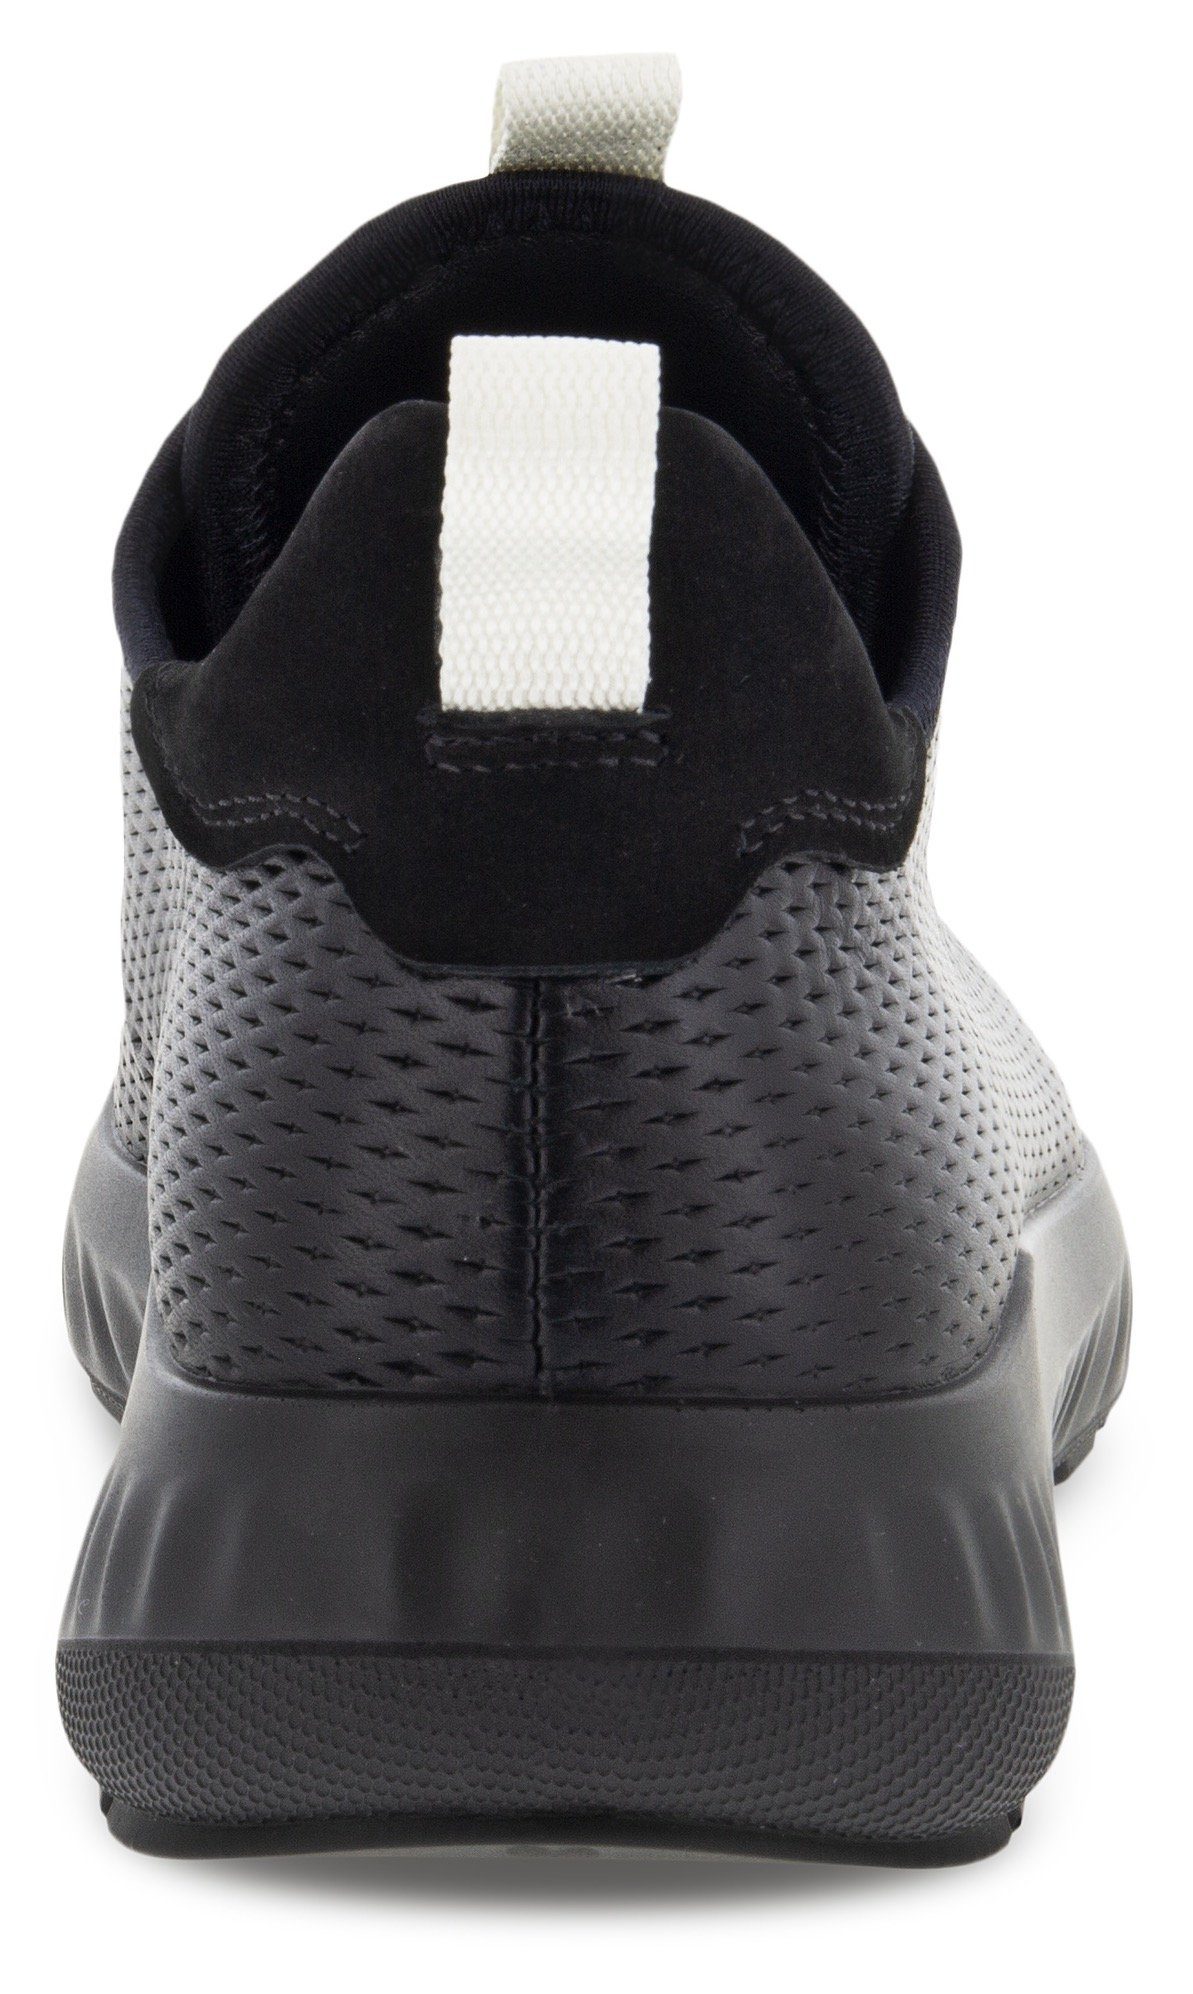 Ecco ATH-1FW Look Sneaker in schwarz weiß sportivem